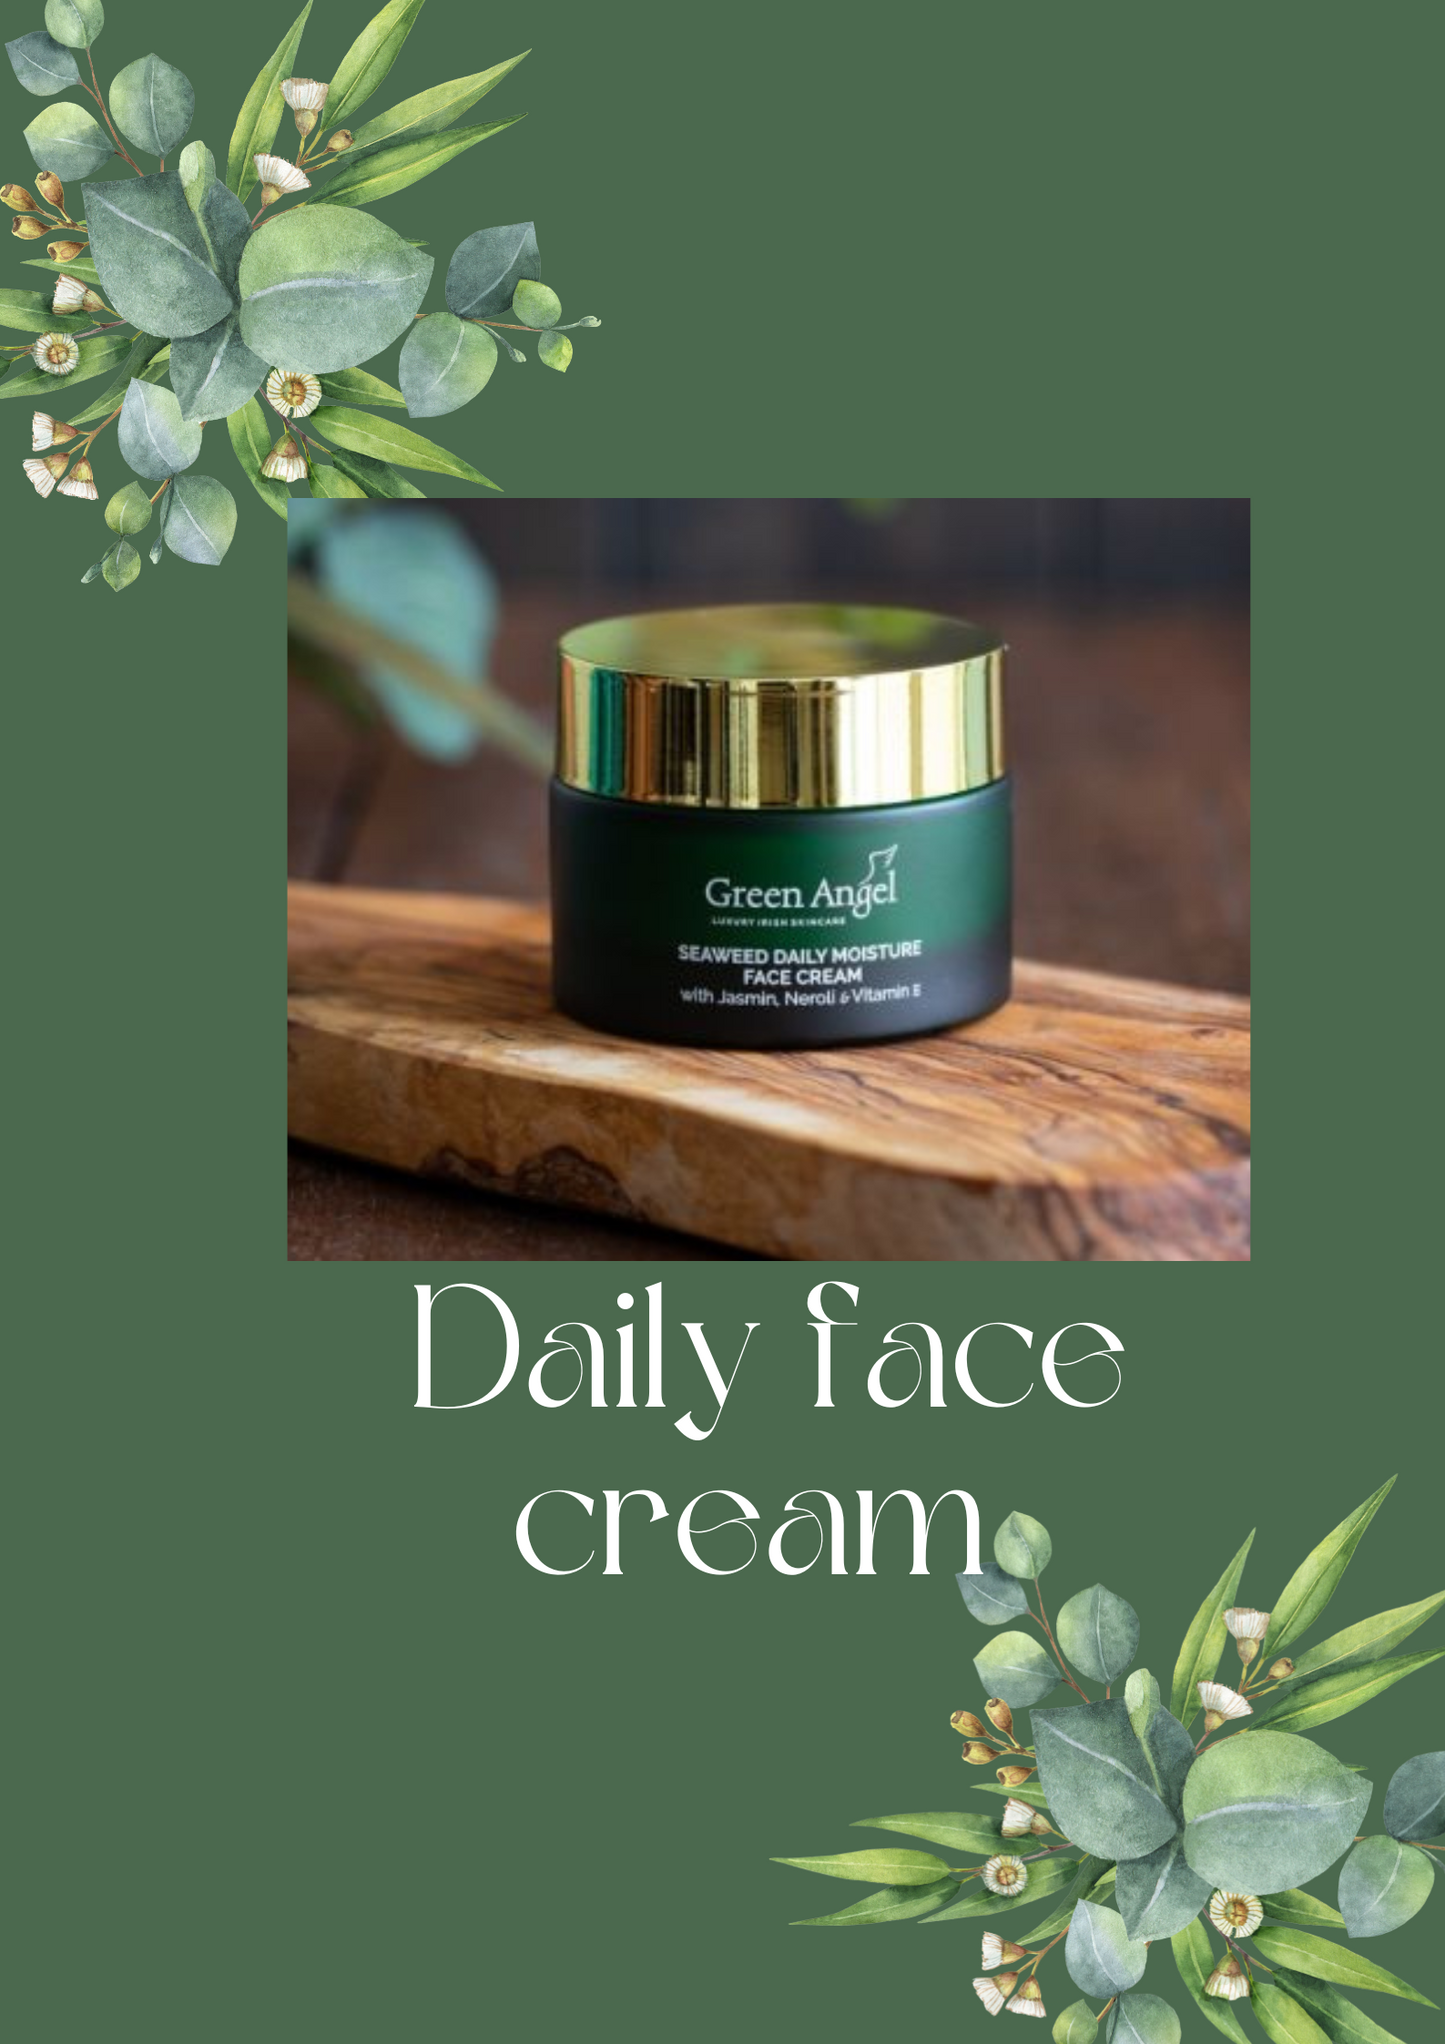 Seaweed Daily Moisture Face Cream with Jasmine, Neroli & Vitamin E by Green Angel